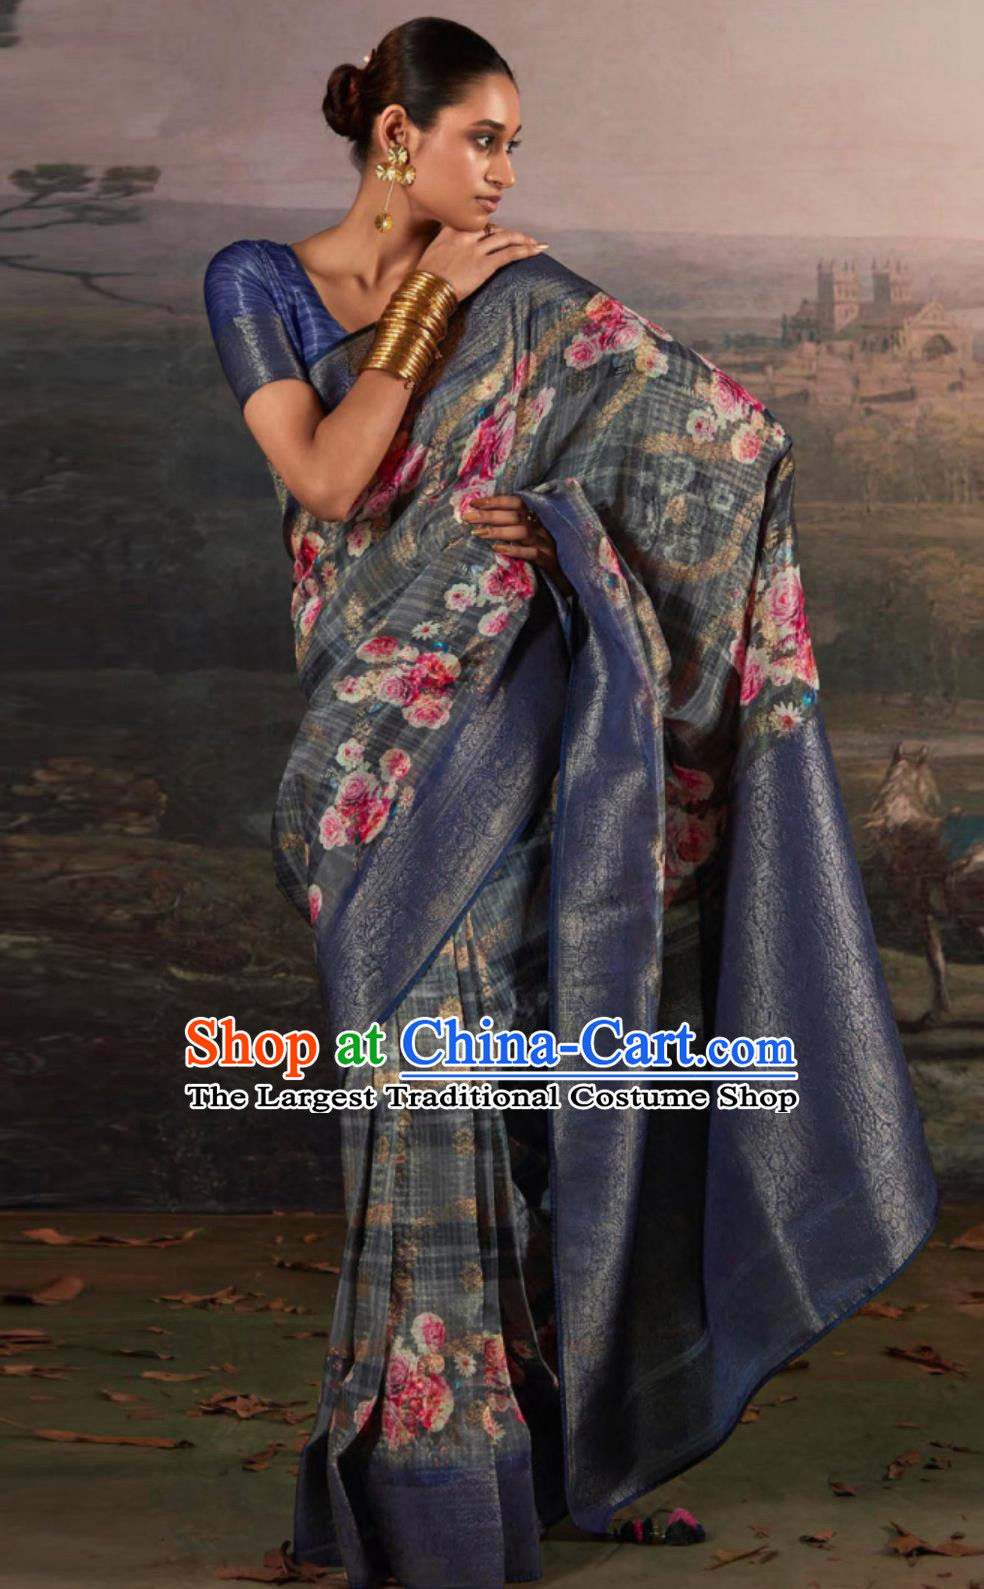 India Traditional Costume Women Dark Blue Sari Dress Indian National Clothing